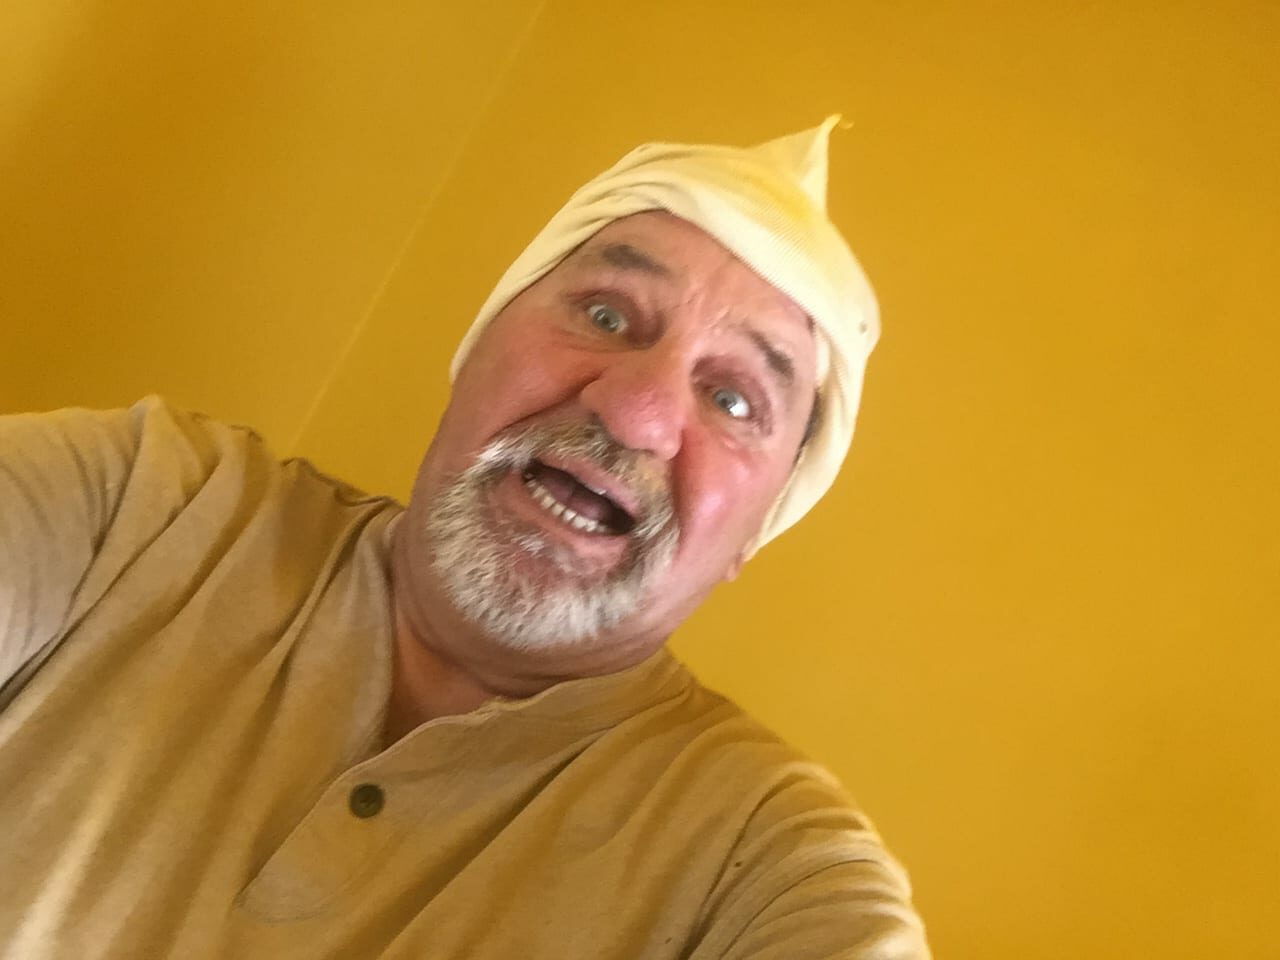 selfie of a man in a yellow shirt